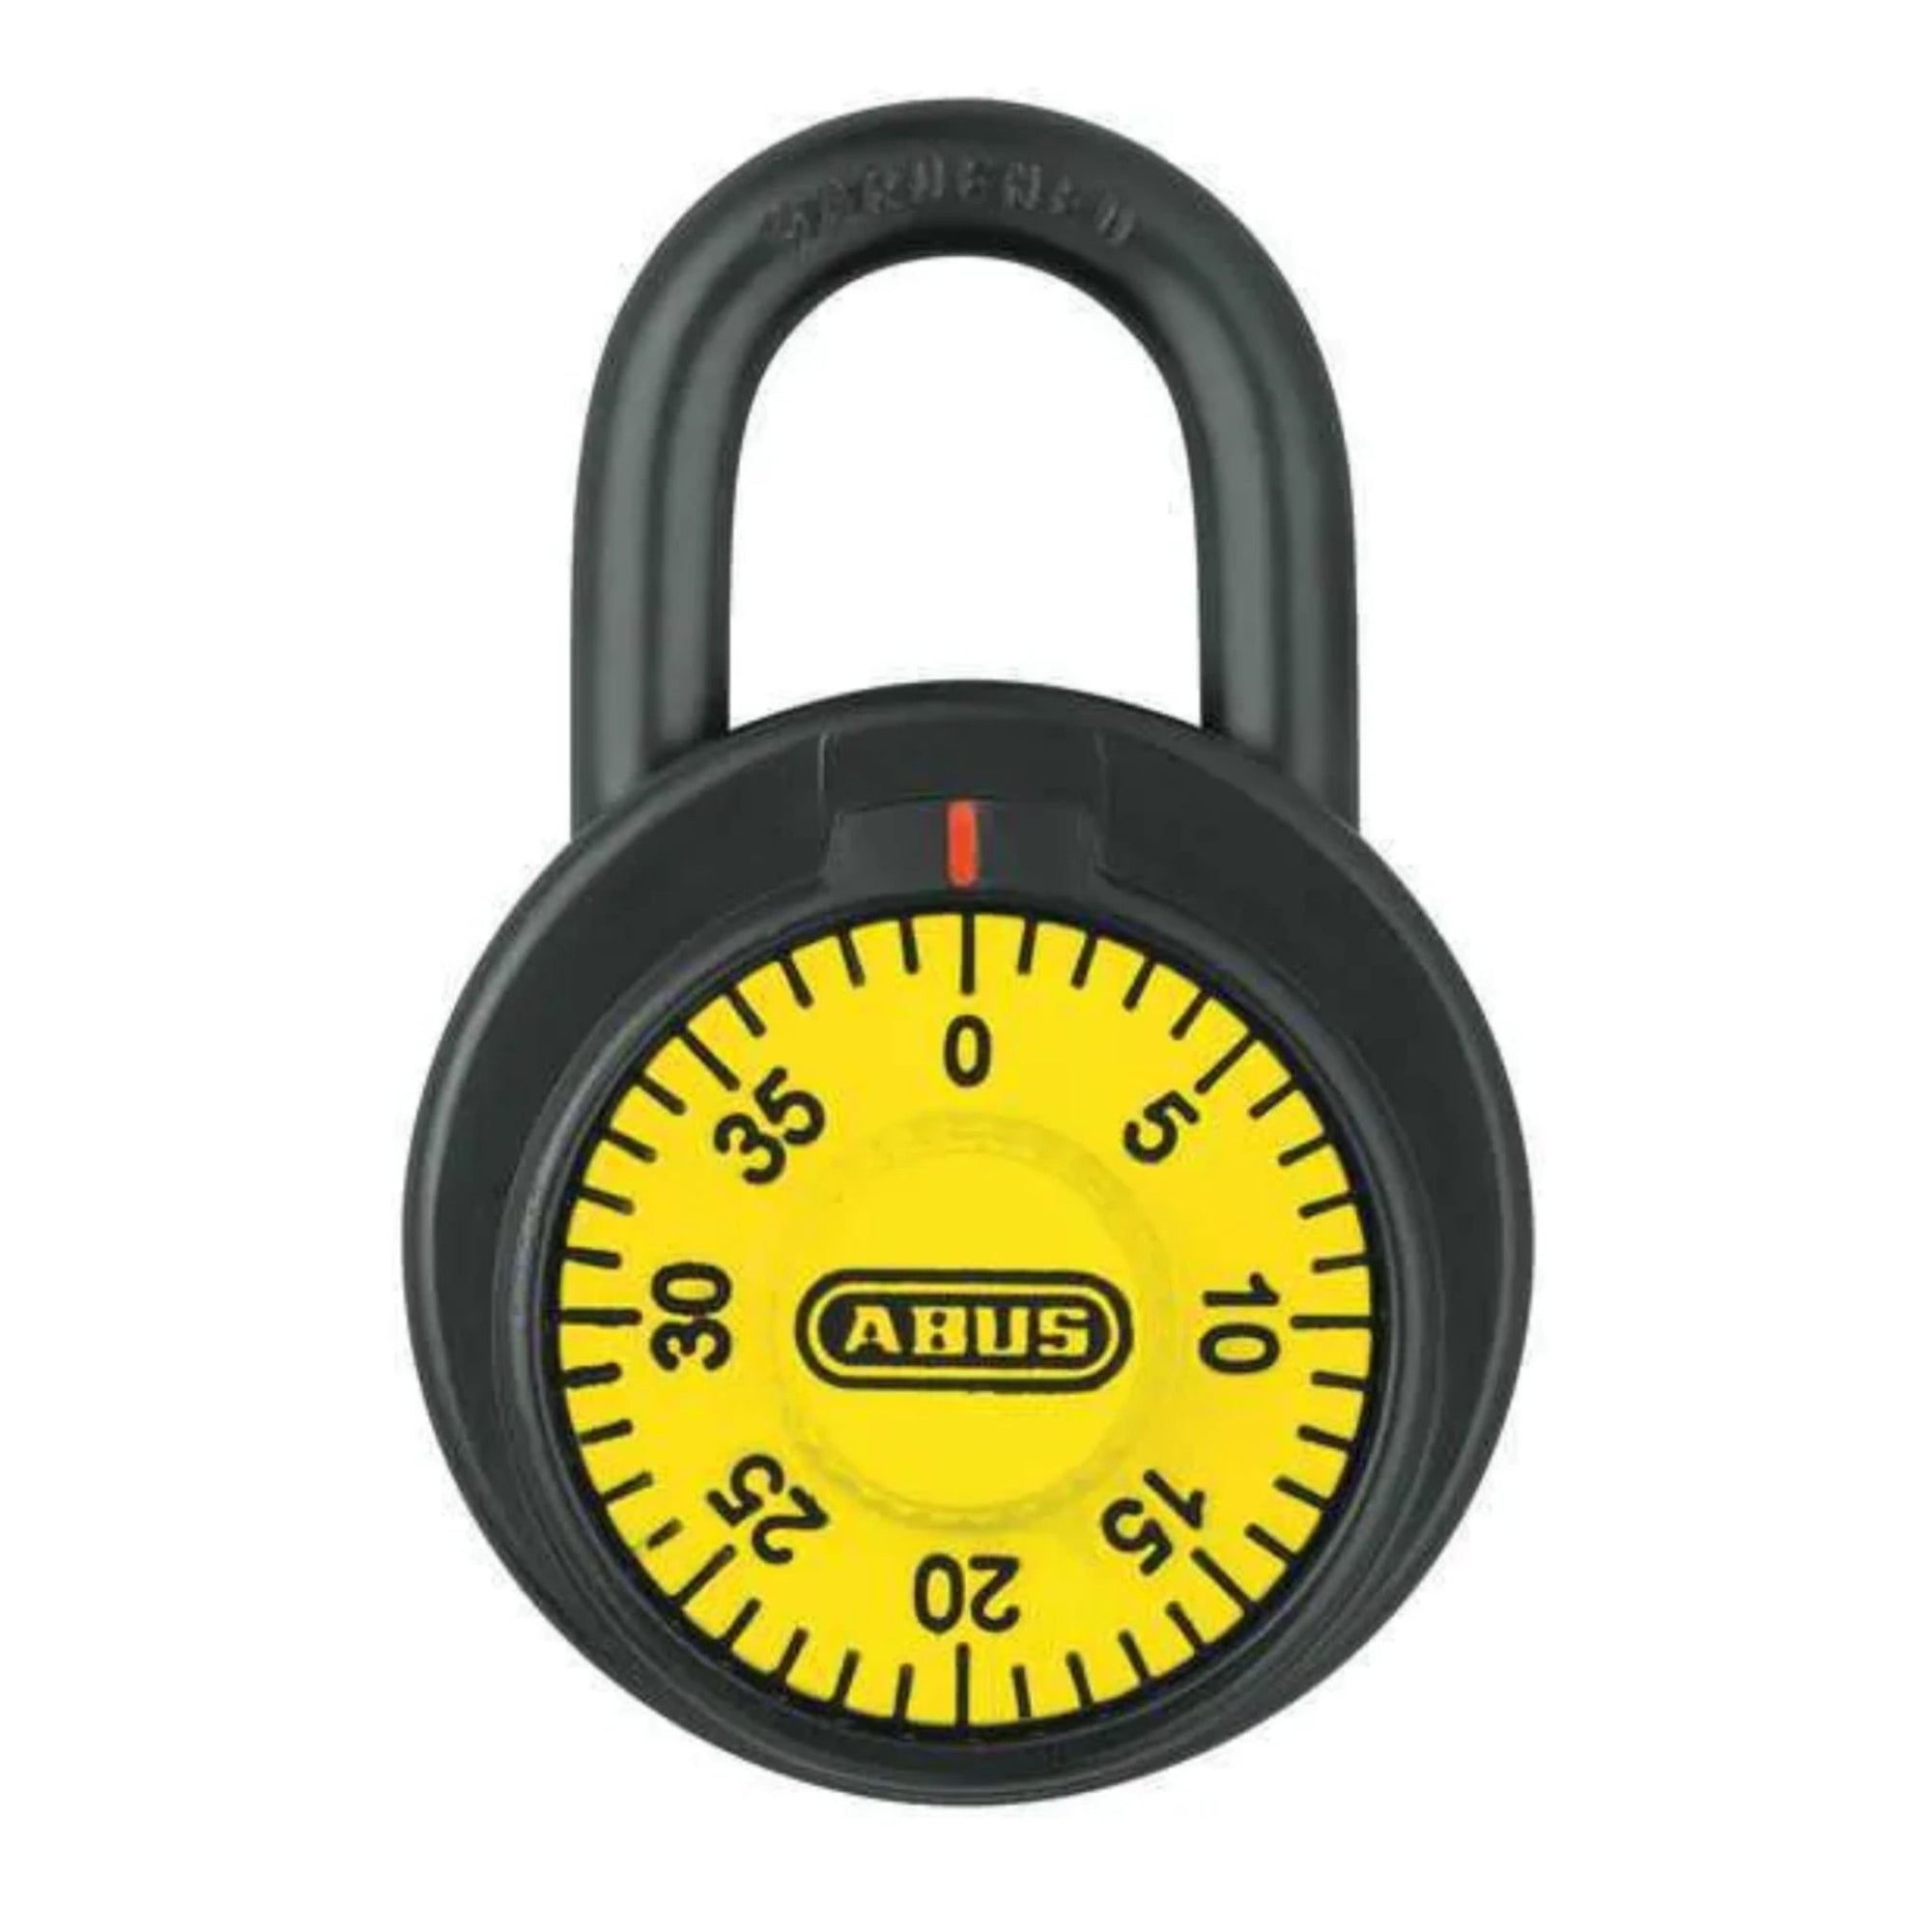 Abus 78/50 KC KA 503A Yellow Locker Padlock with Key Control Matched to Key Number KA503A - The Lock Source